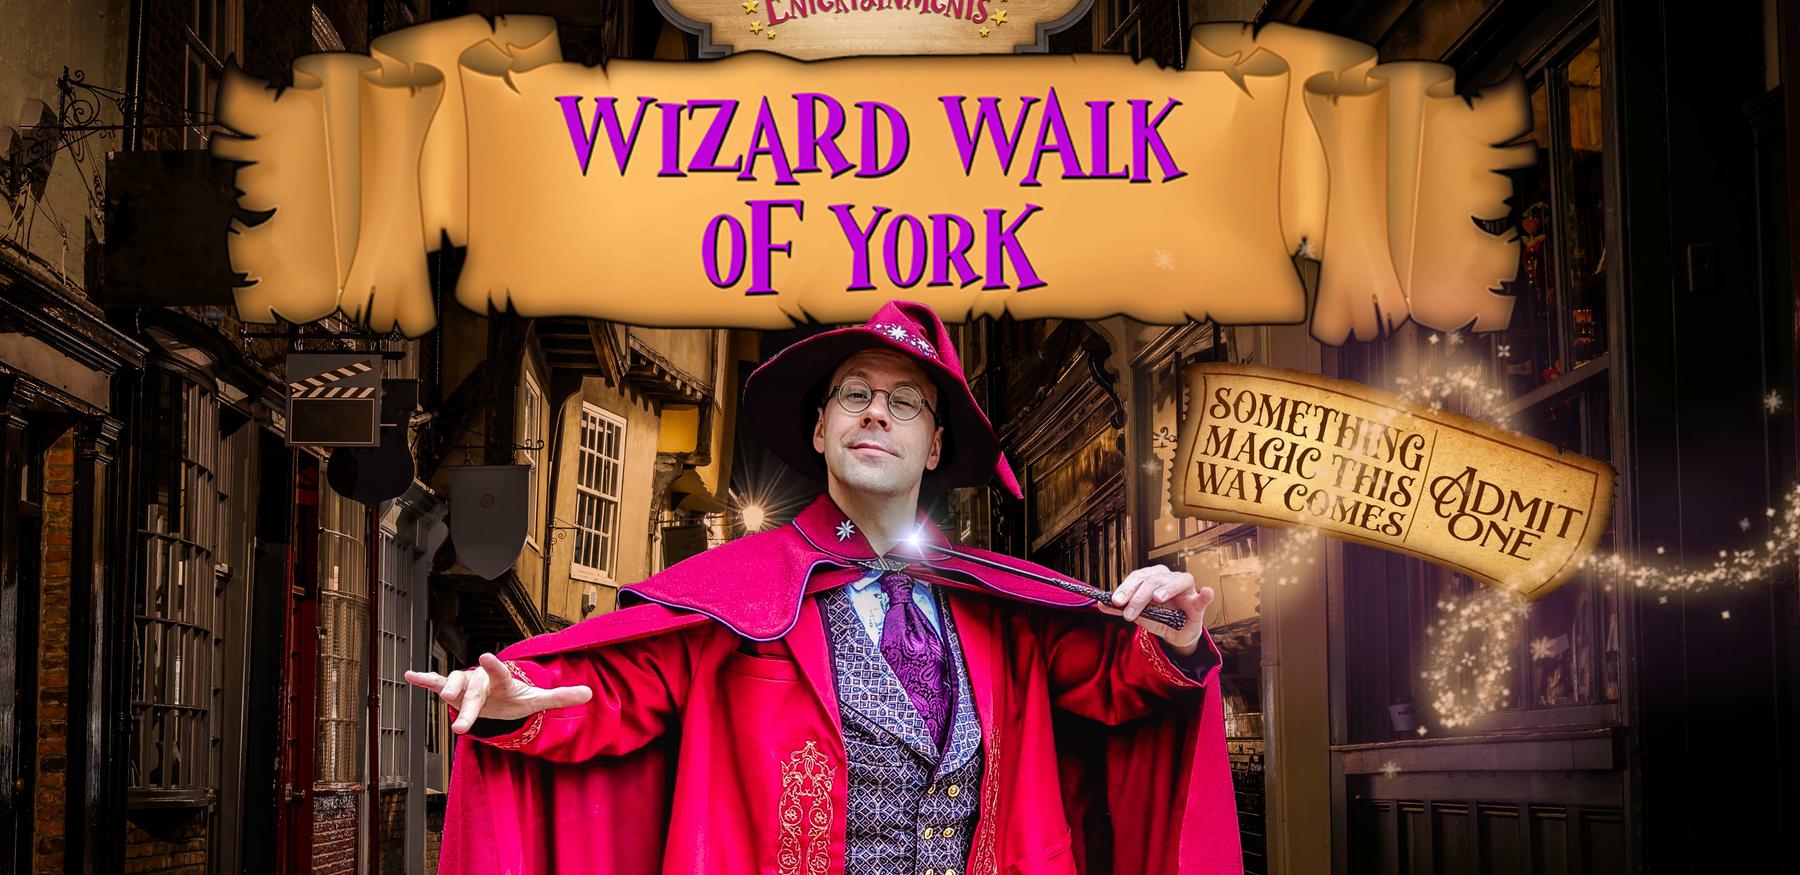 1 Visit York cover image Wizard Walk of York